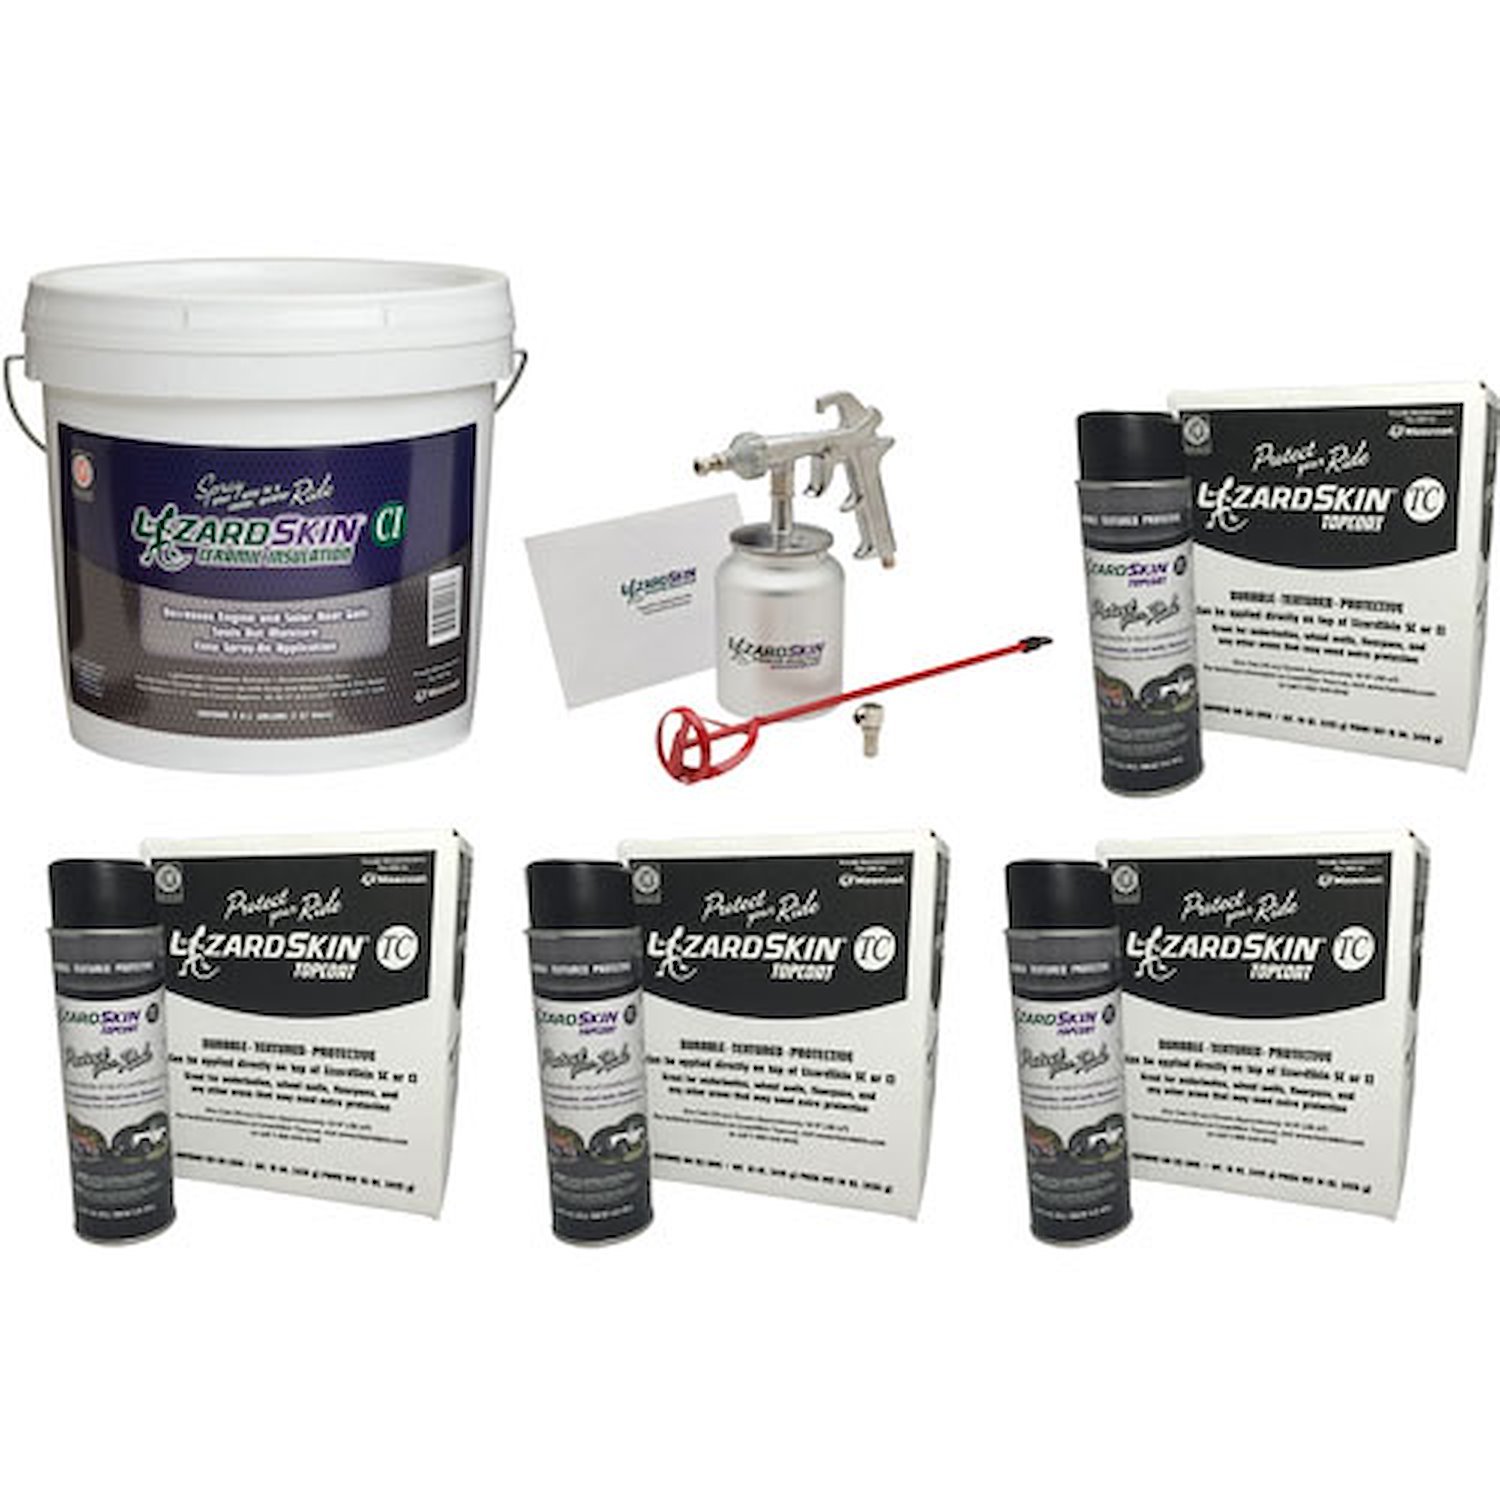 Ceramic Insulation And Gun Kit Includes: Black Ceramic Insulation (2 Gallon)